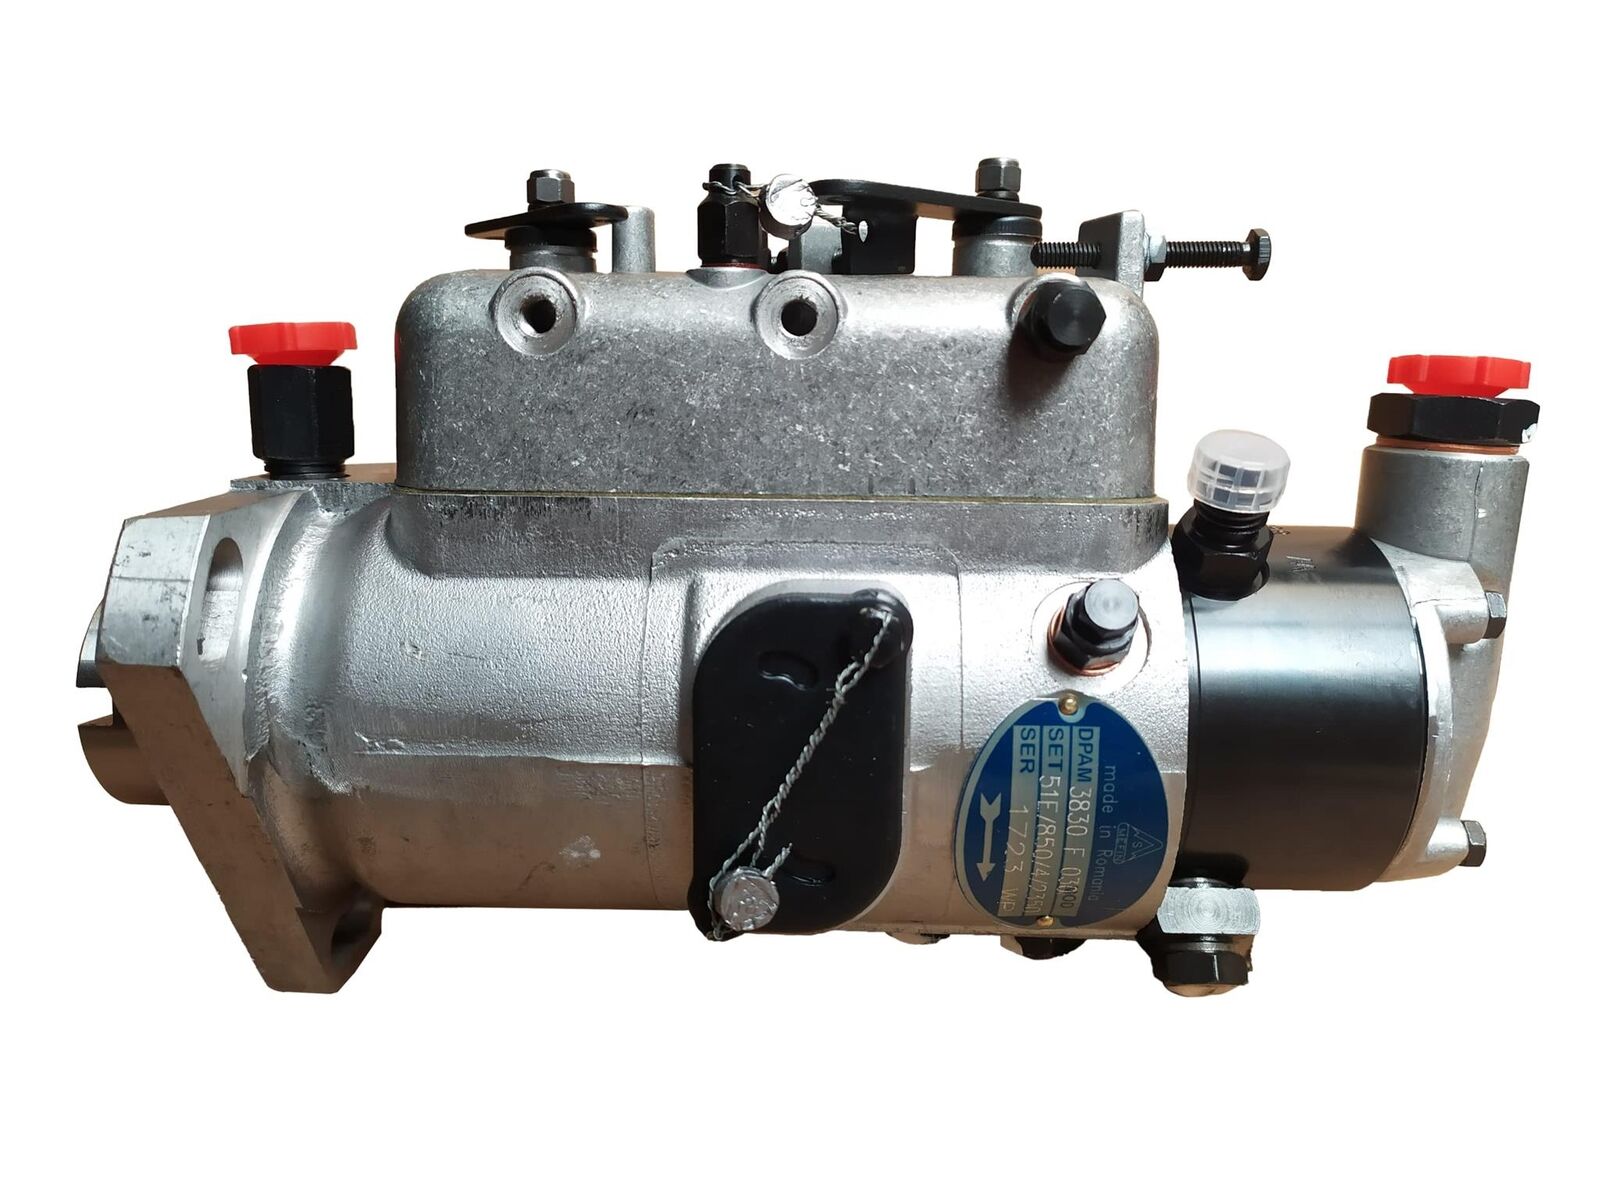 TTParts Fuel Injection Pump for Massey Ferguson 203 35 205 50 881306V91